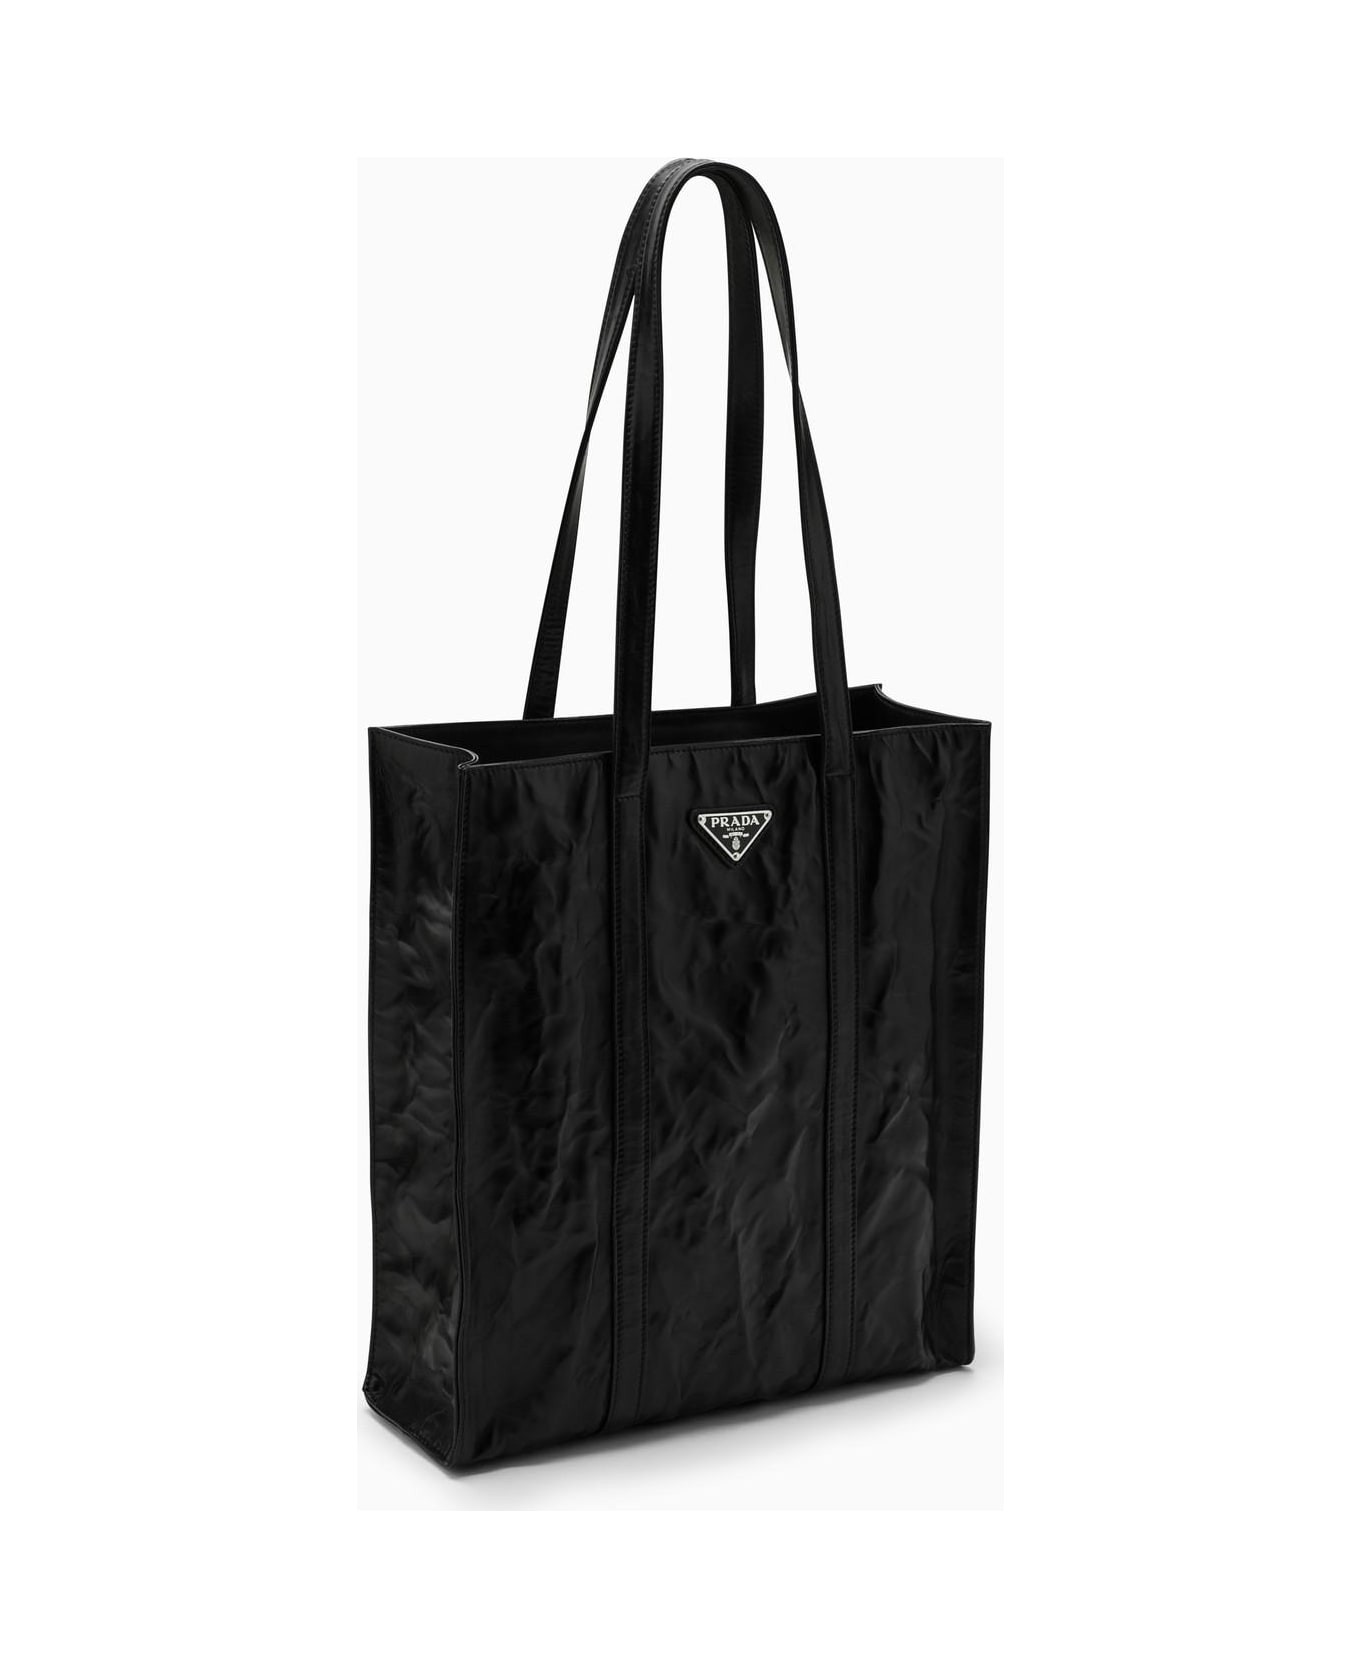 Prada Black Leather Bag - Nero